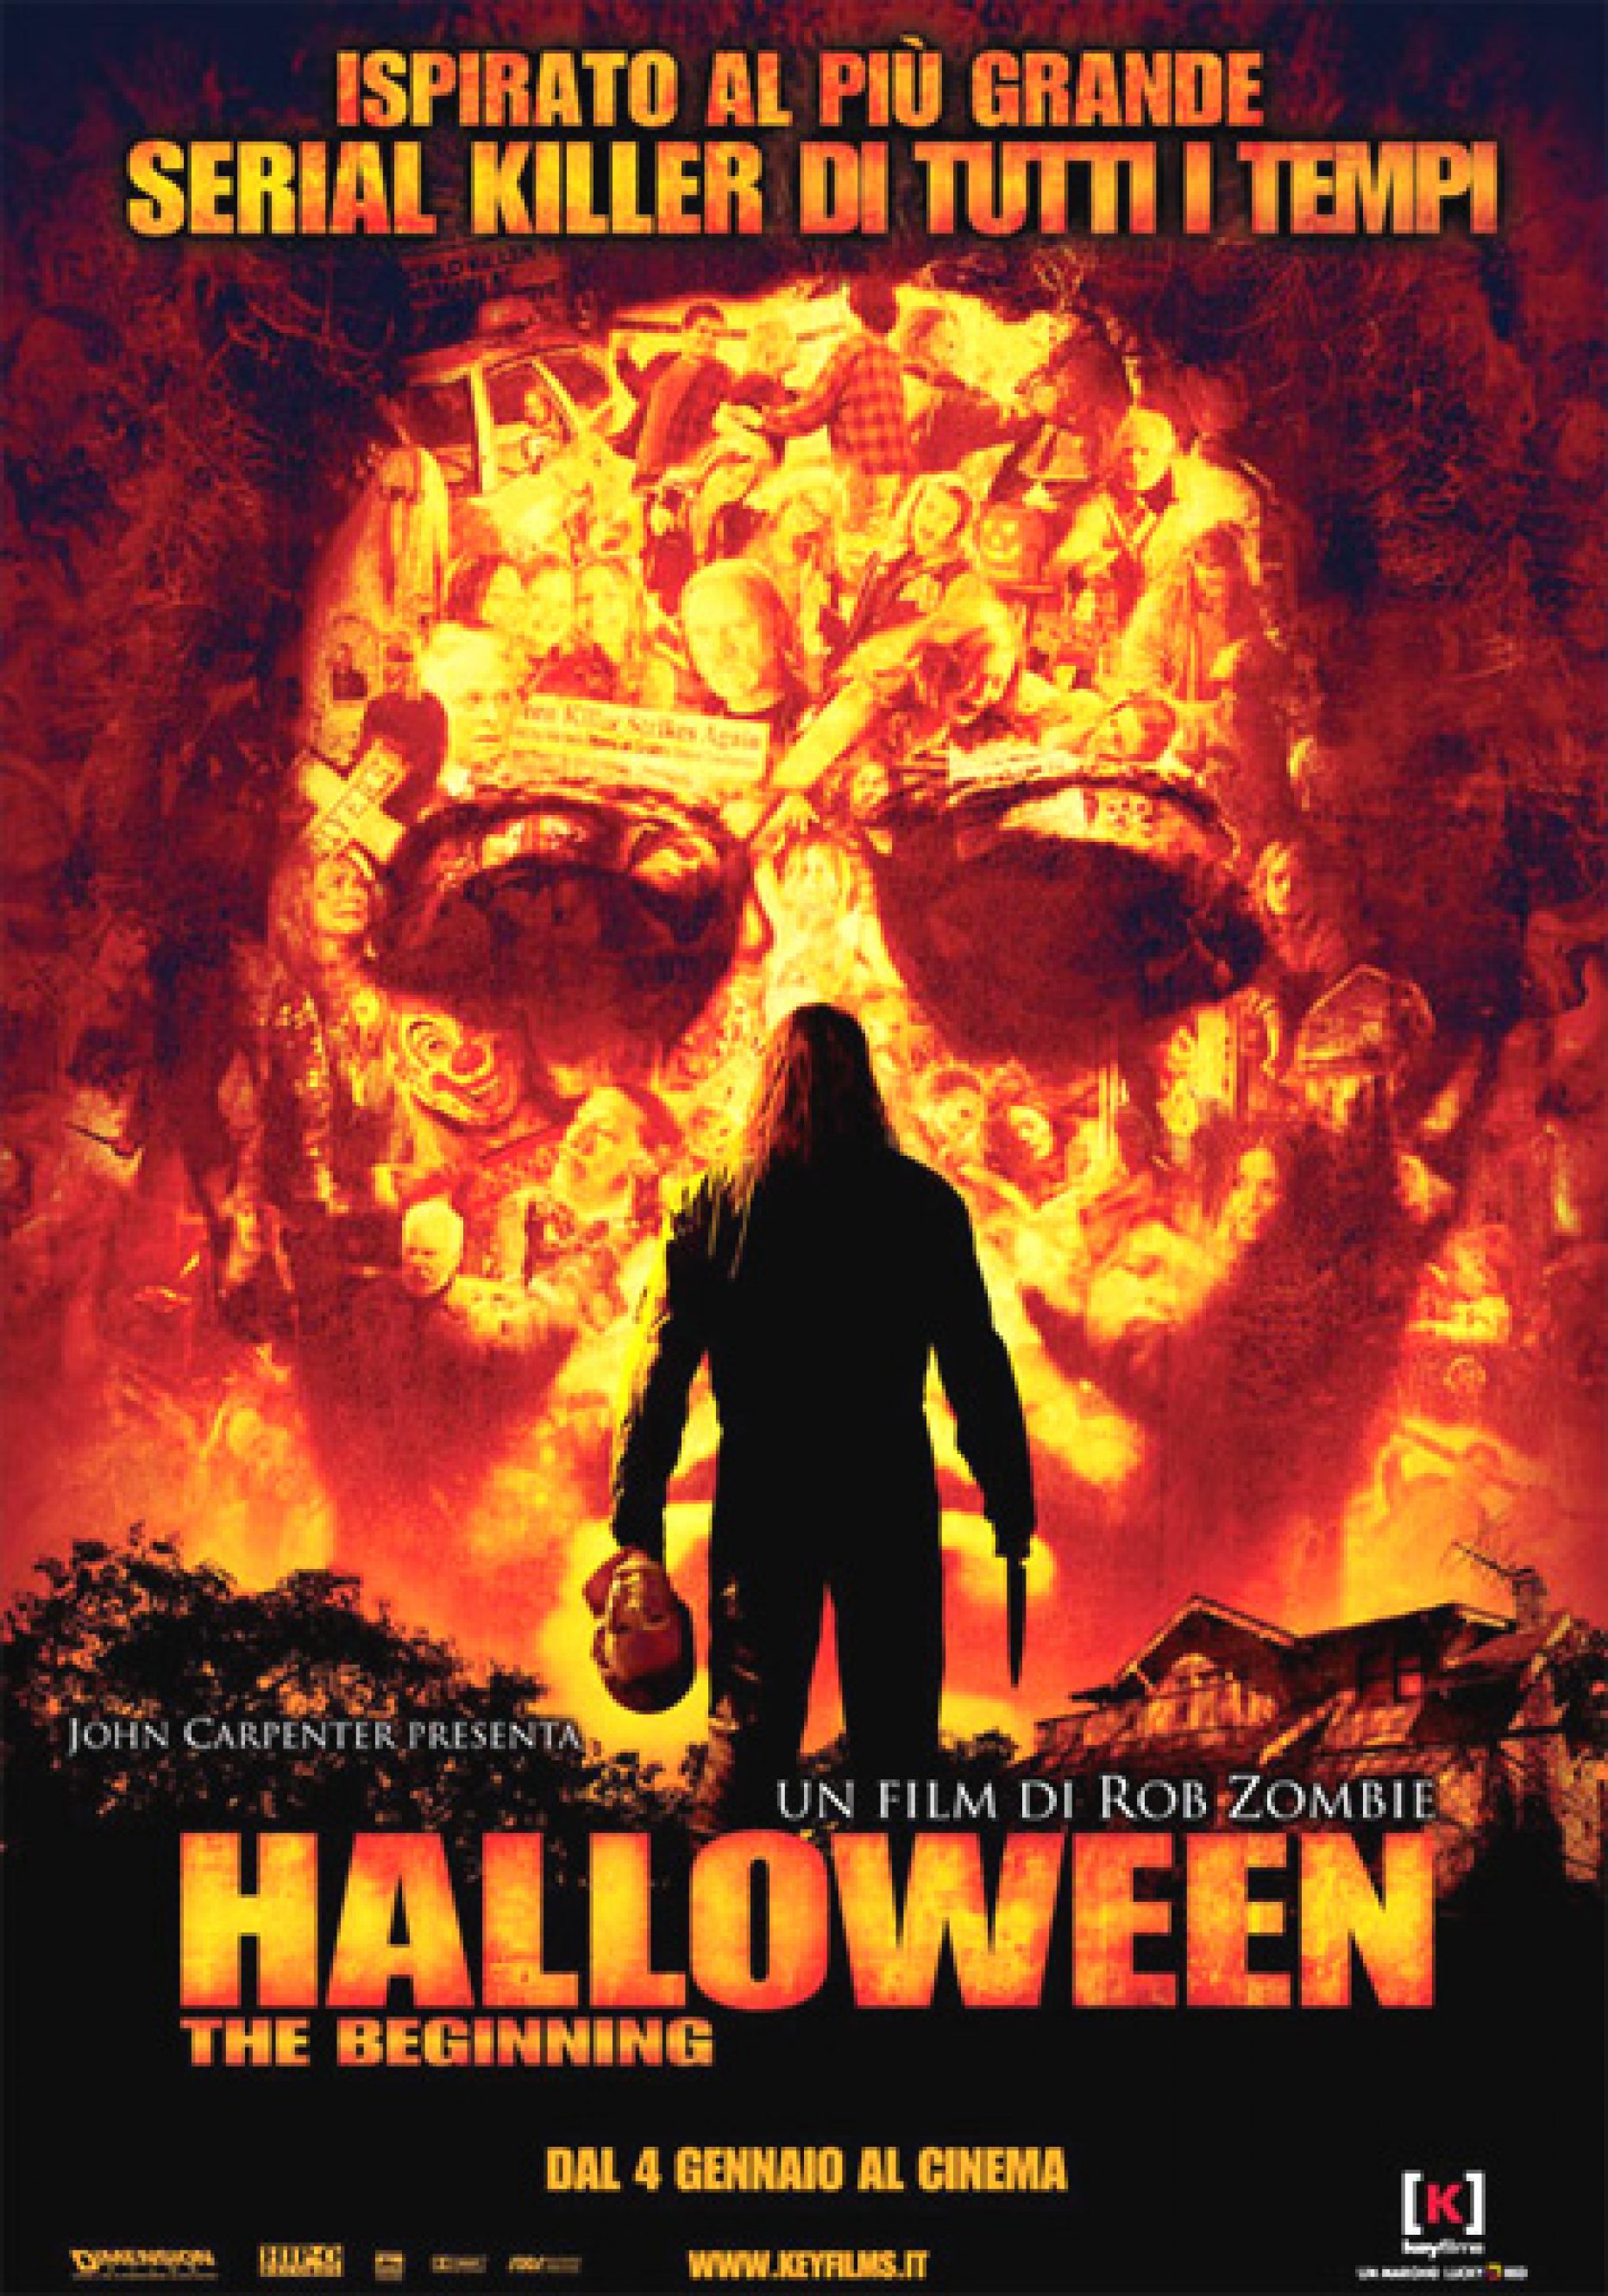 Halloween: The Beginning (Rob Zombie, 2007)